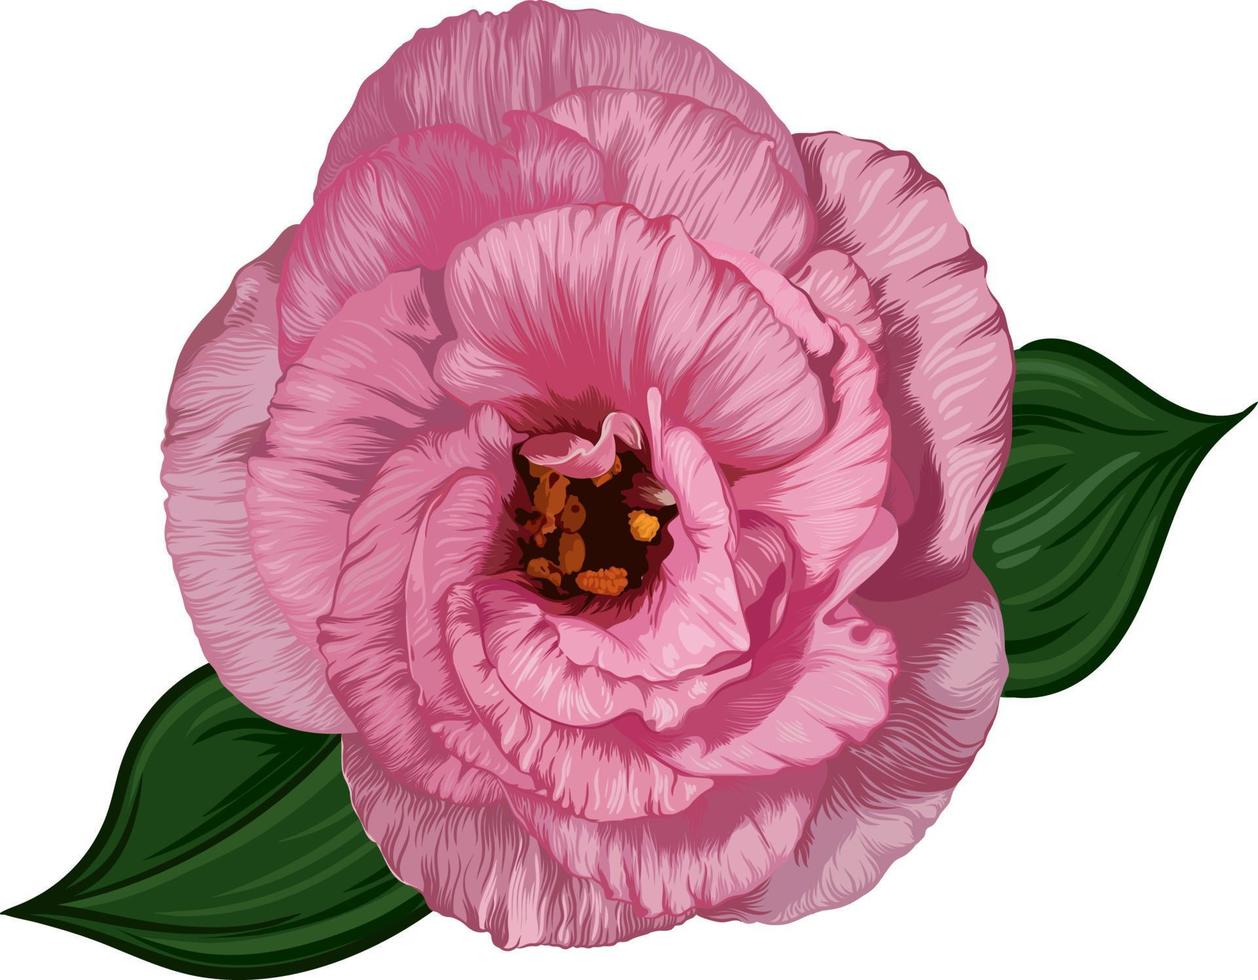 pink eustoma flower isolated on white background. vector realistic illustration